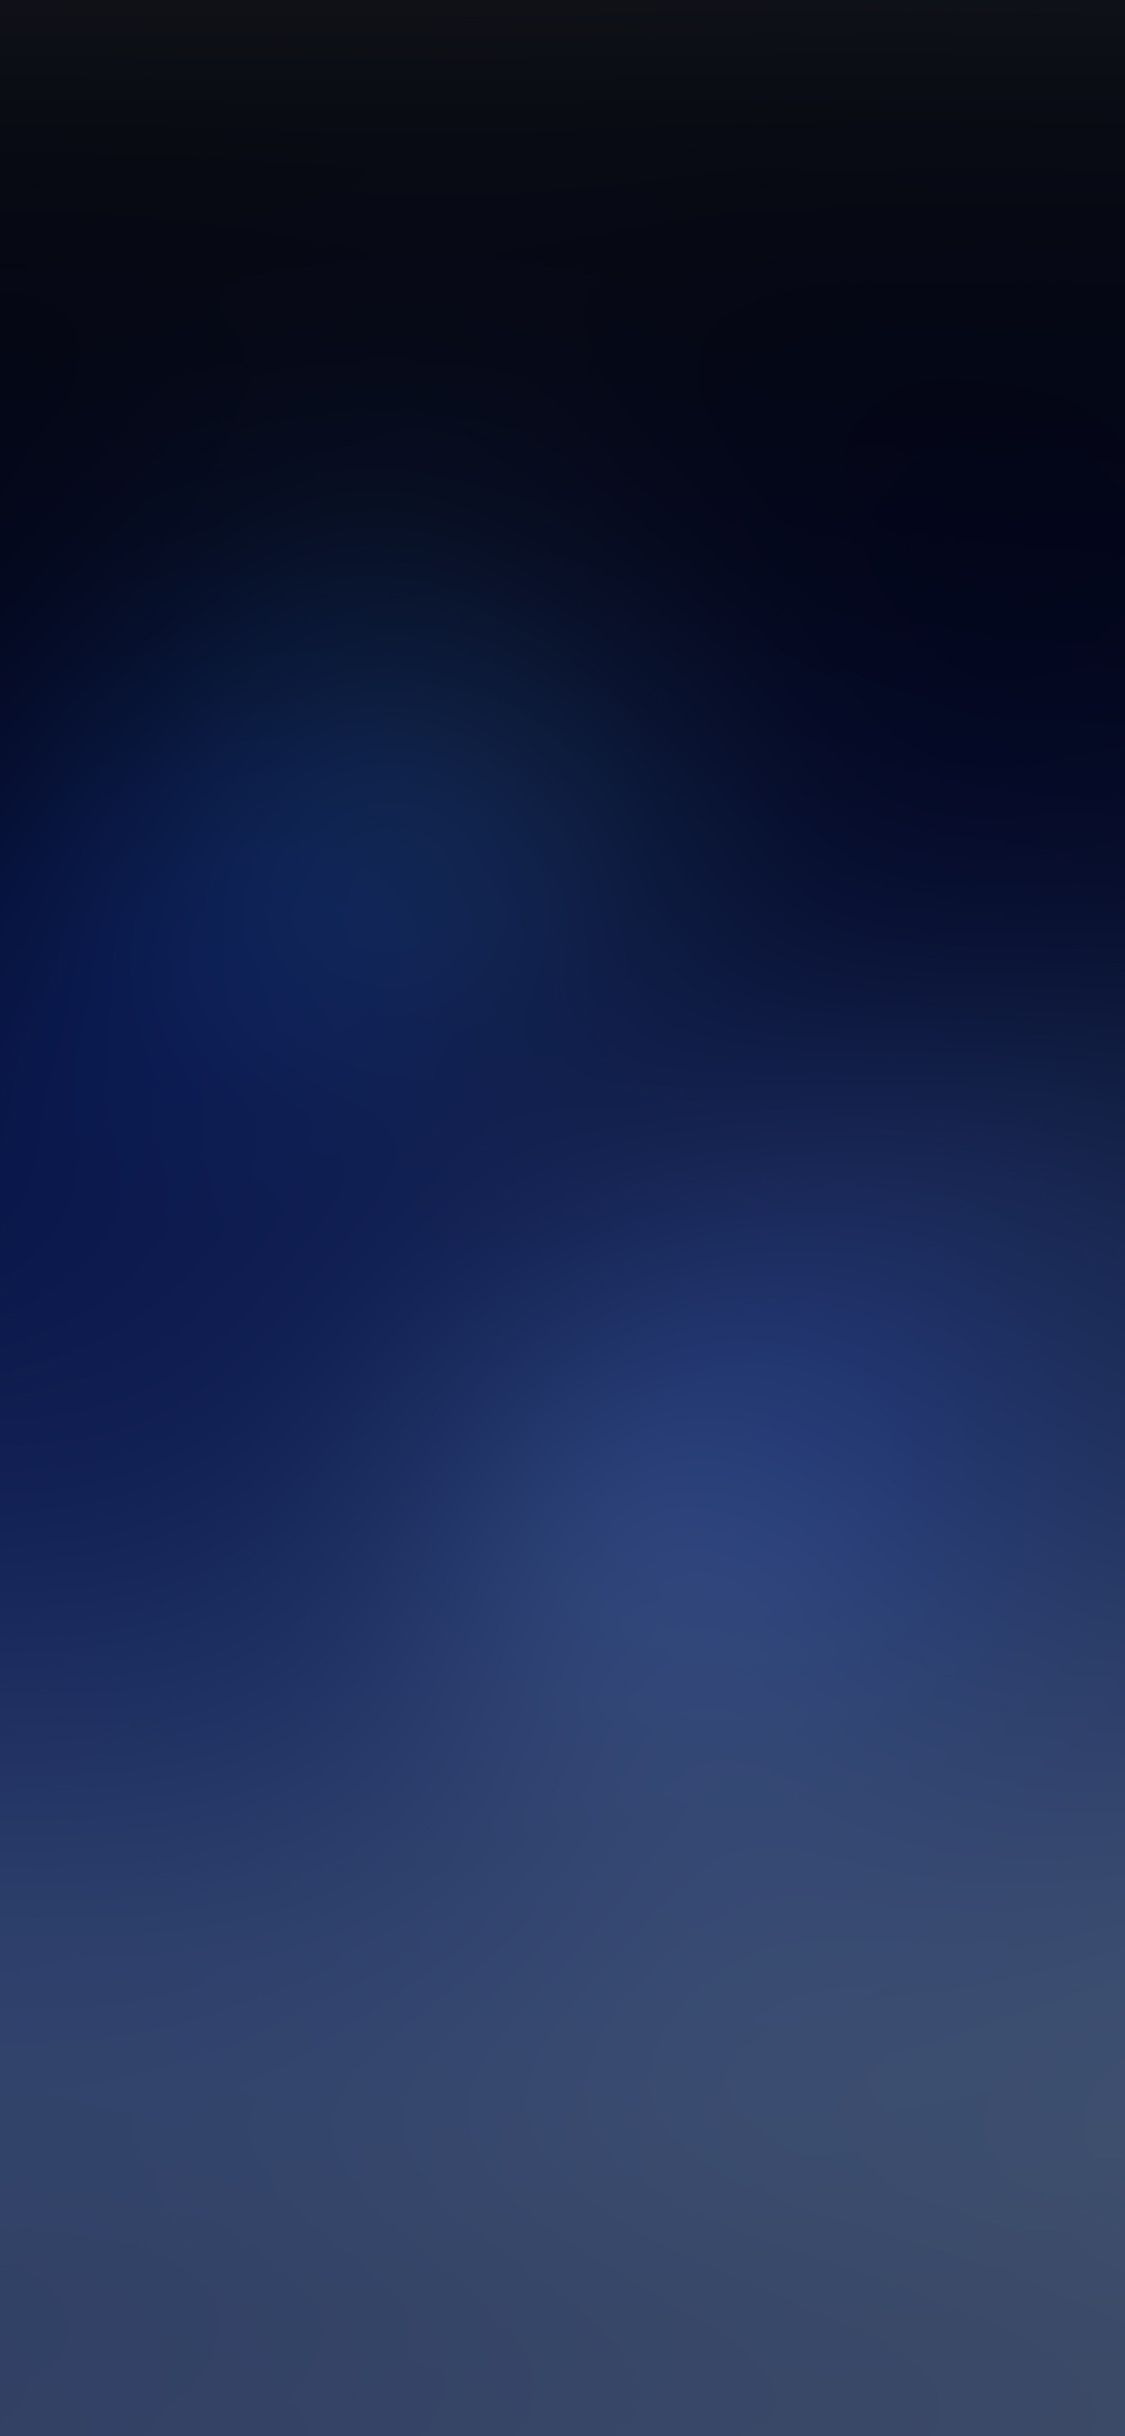 iPhone X wallpaper. blue space blur gradation